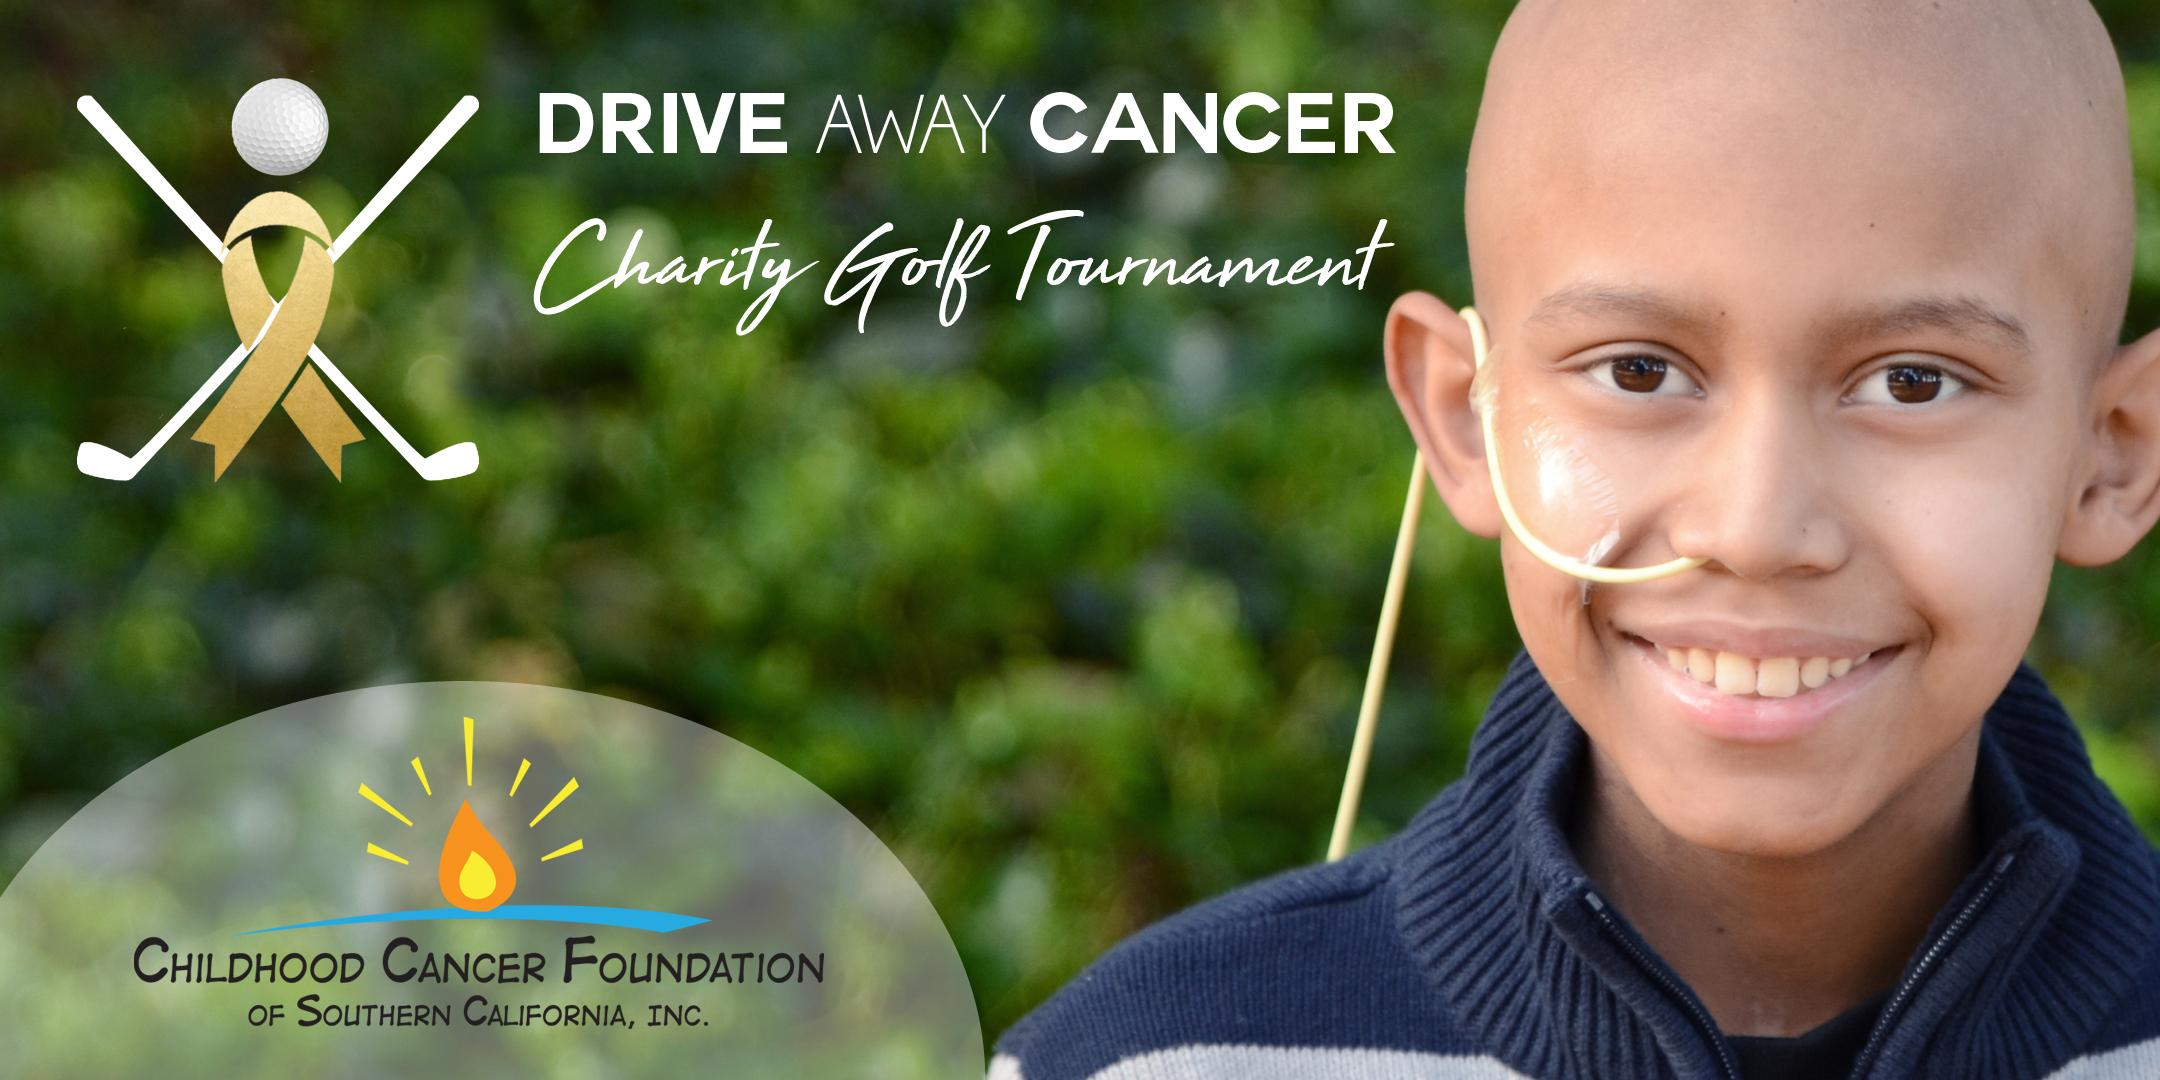 2017 "DRIVE AWAY CANCER" Charity Golf Tournament